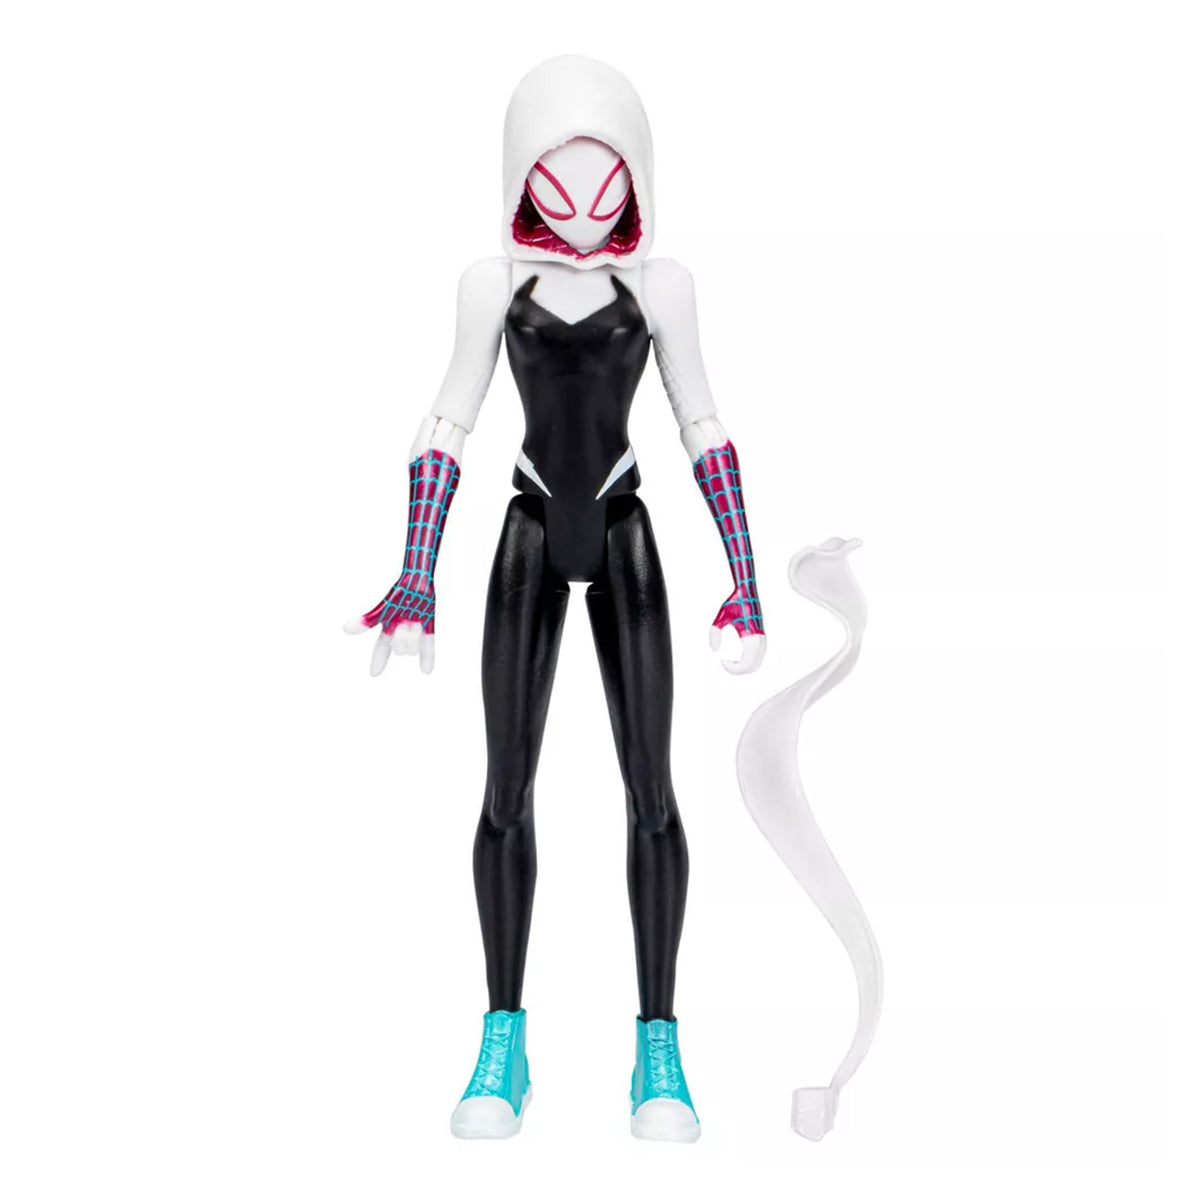 Spider-Verse Spider-Gwen Toy figure with Accessory